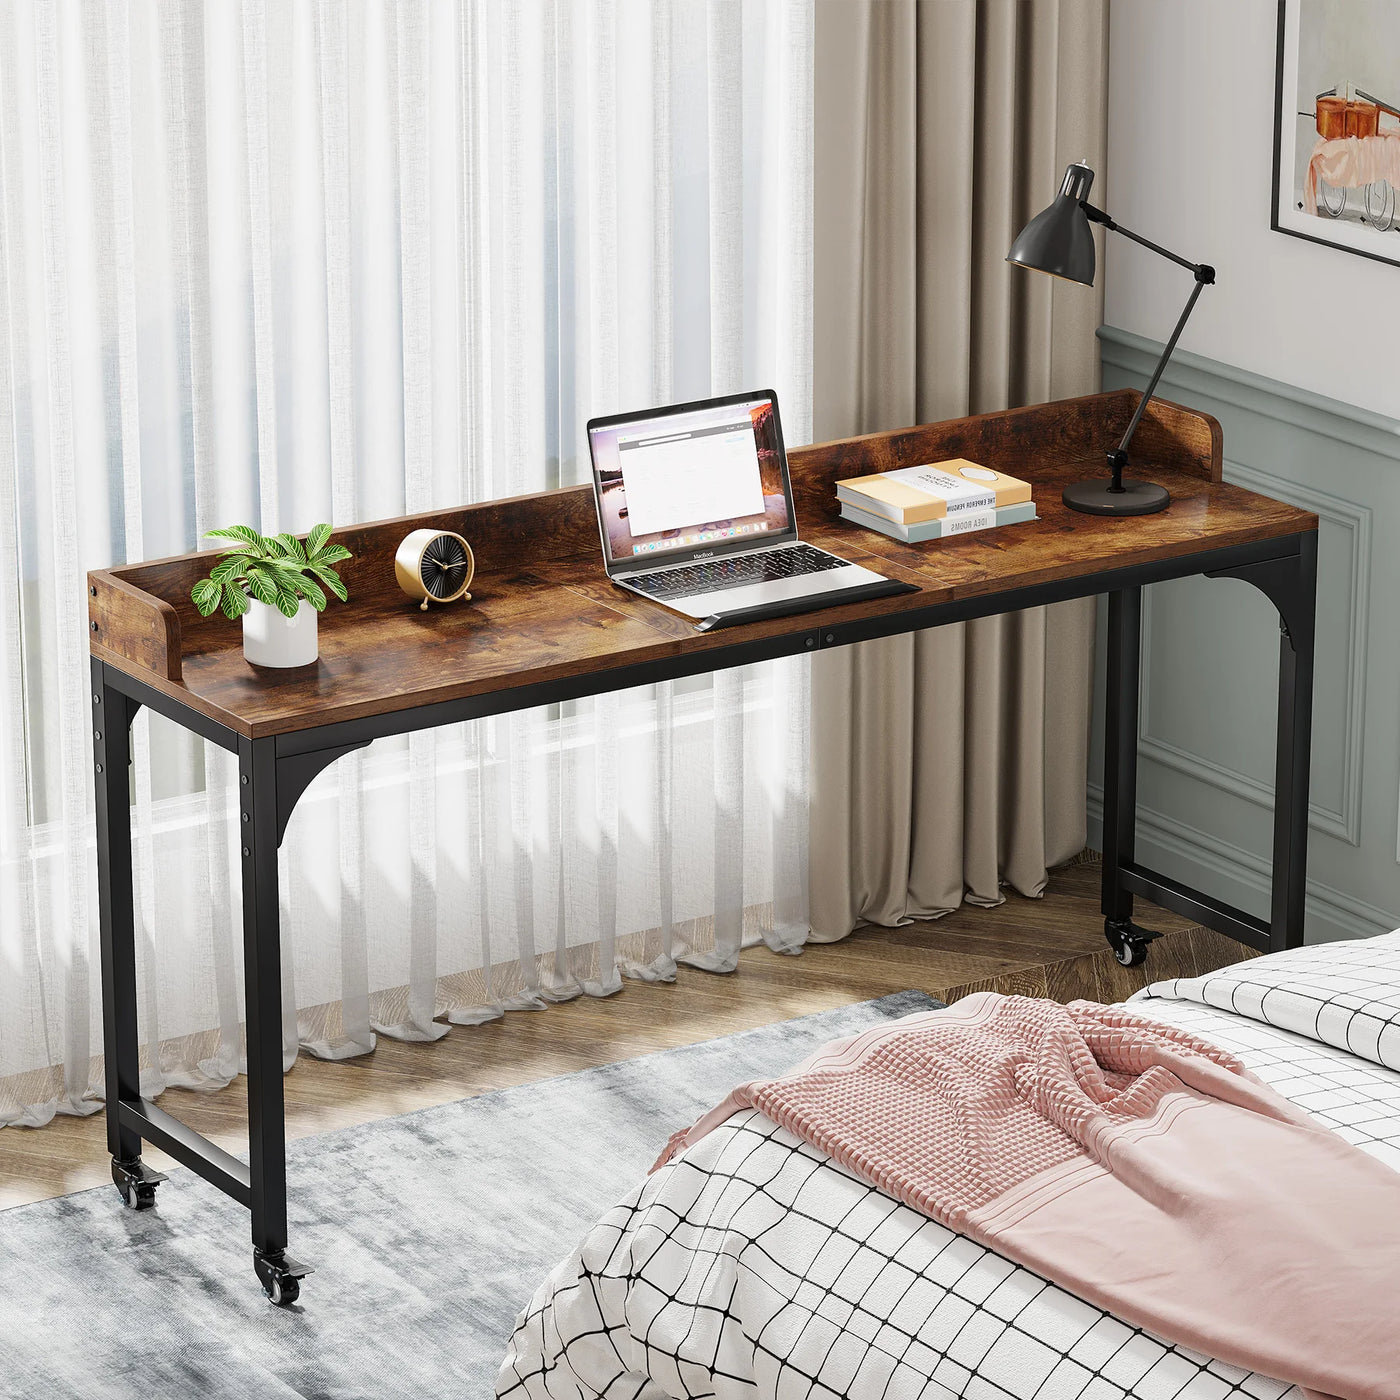 Middleton Bar Style Table | Overbed Table with Adjustable Tilt Stand Board Wooden Desk